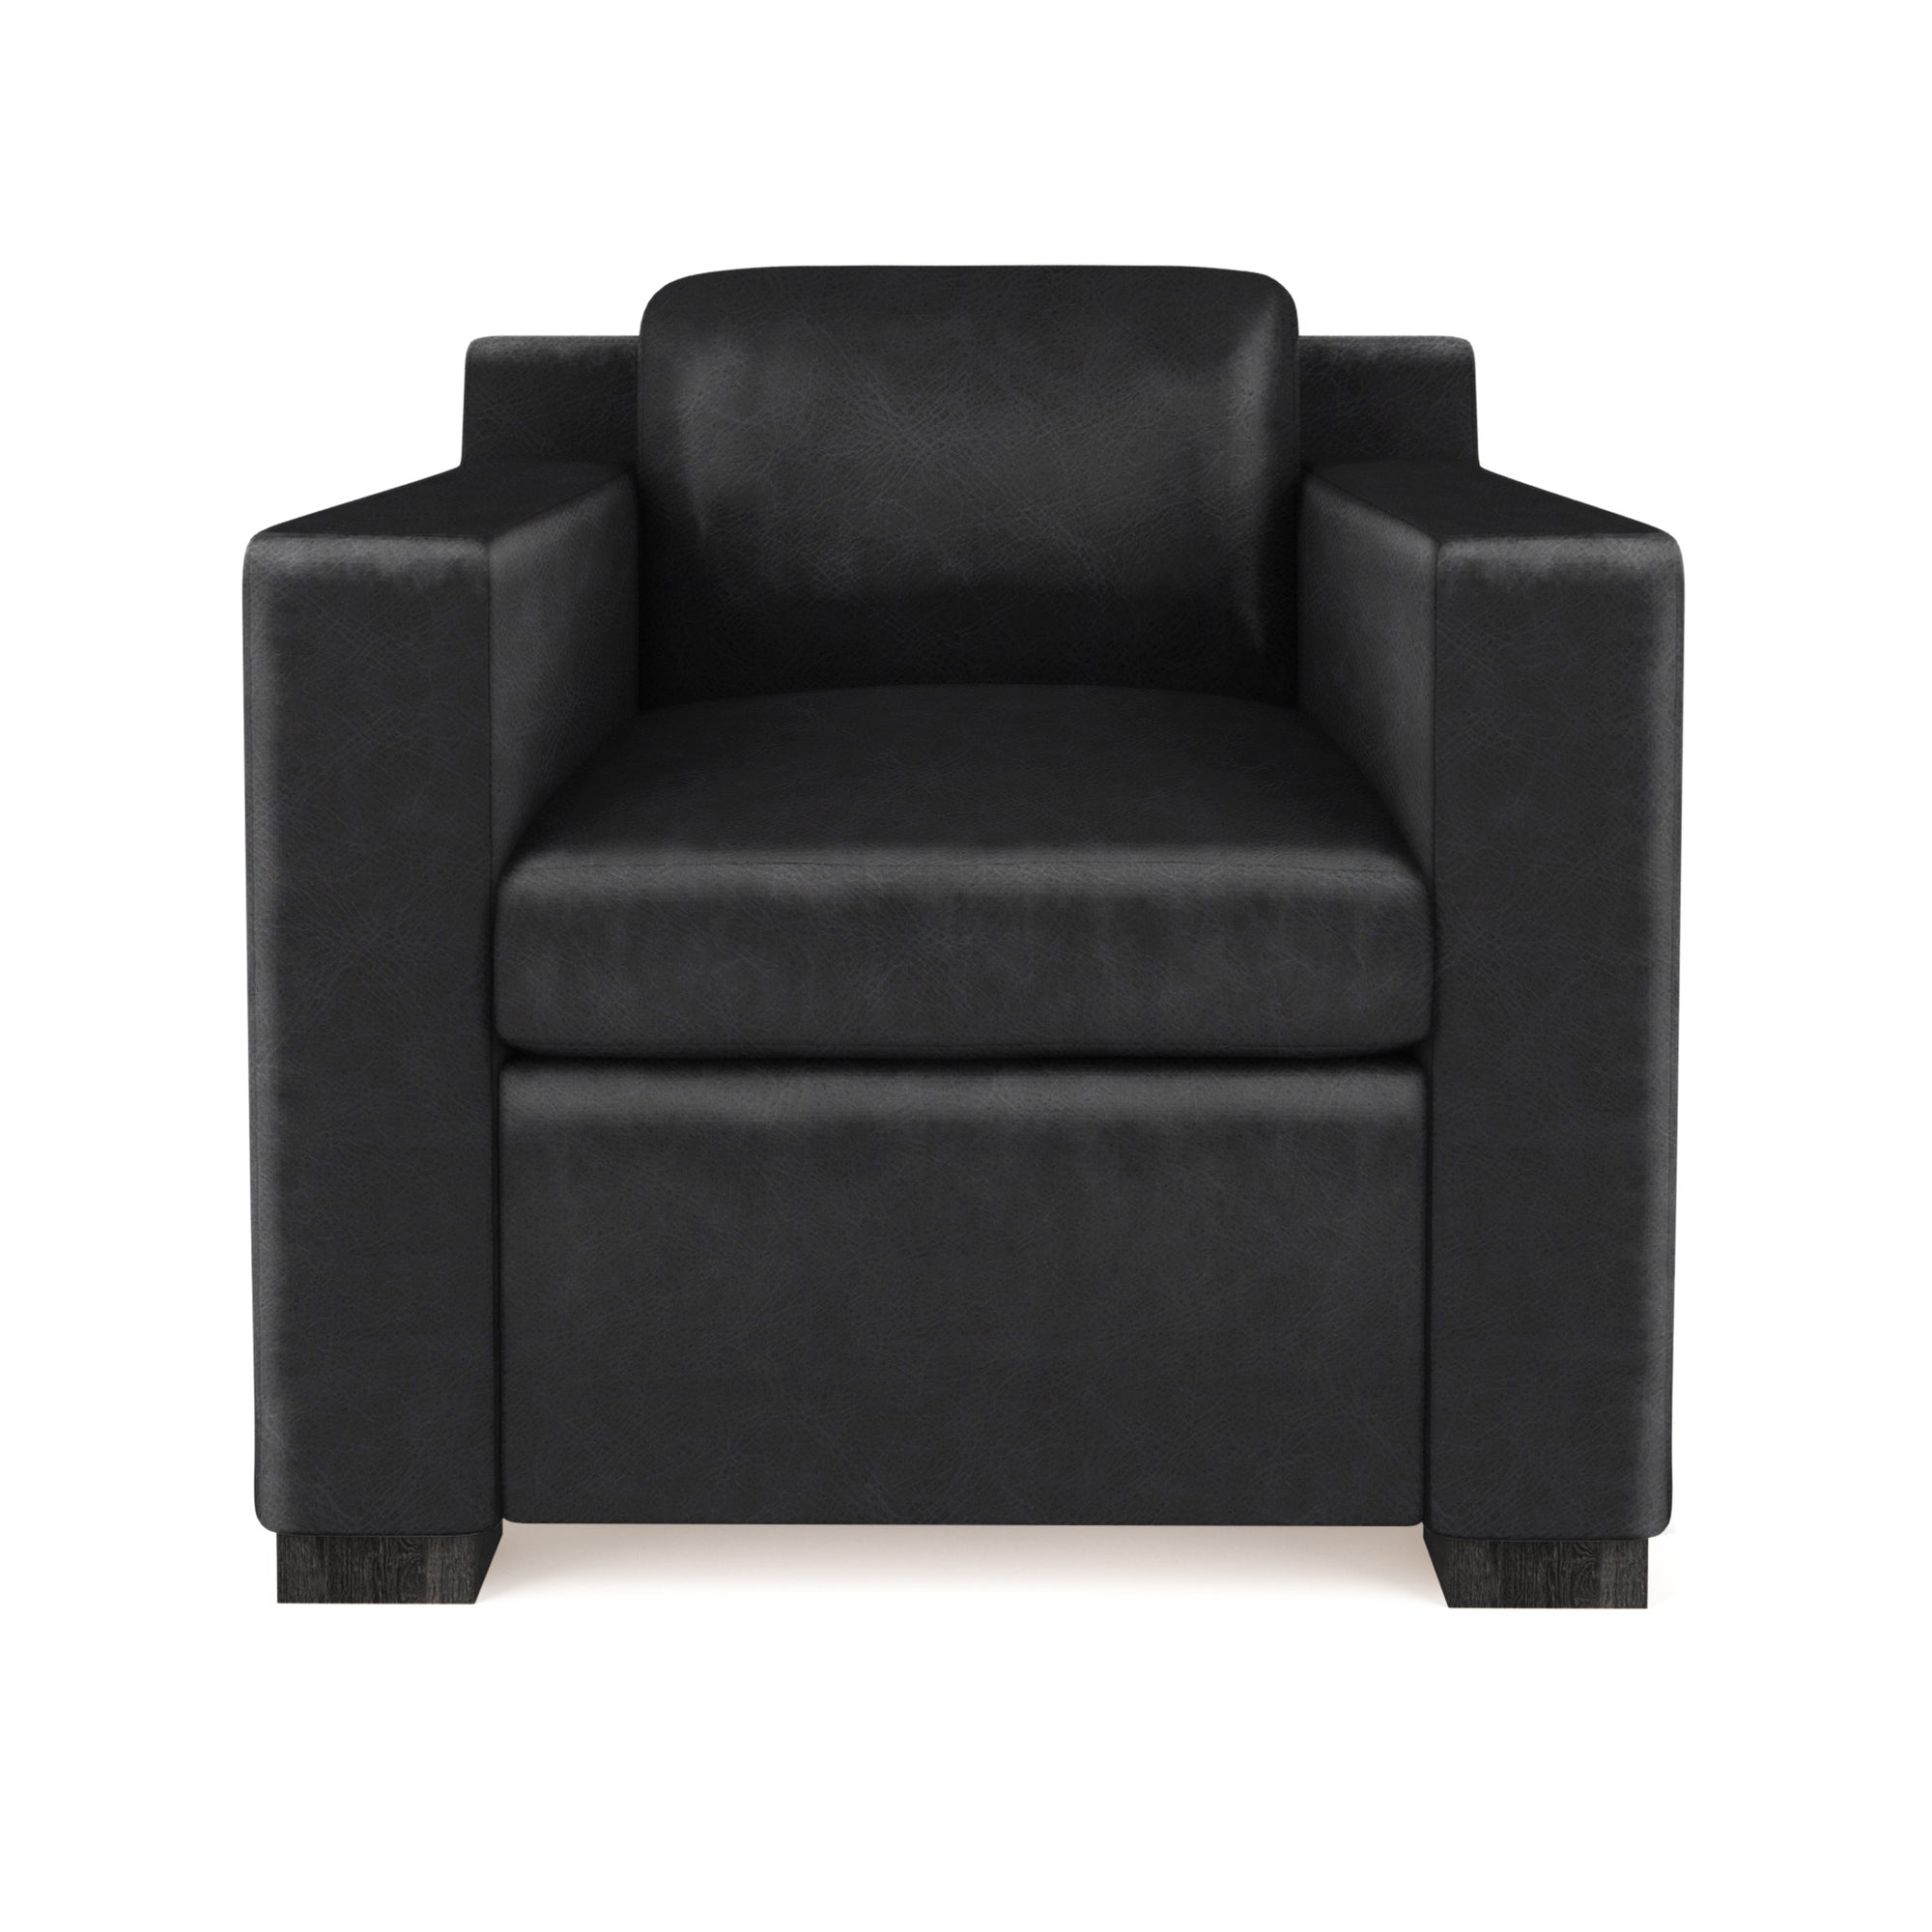 Mercer Chair - Black Jack Vintage Leather